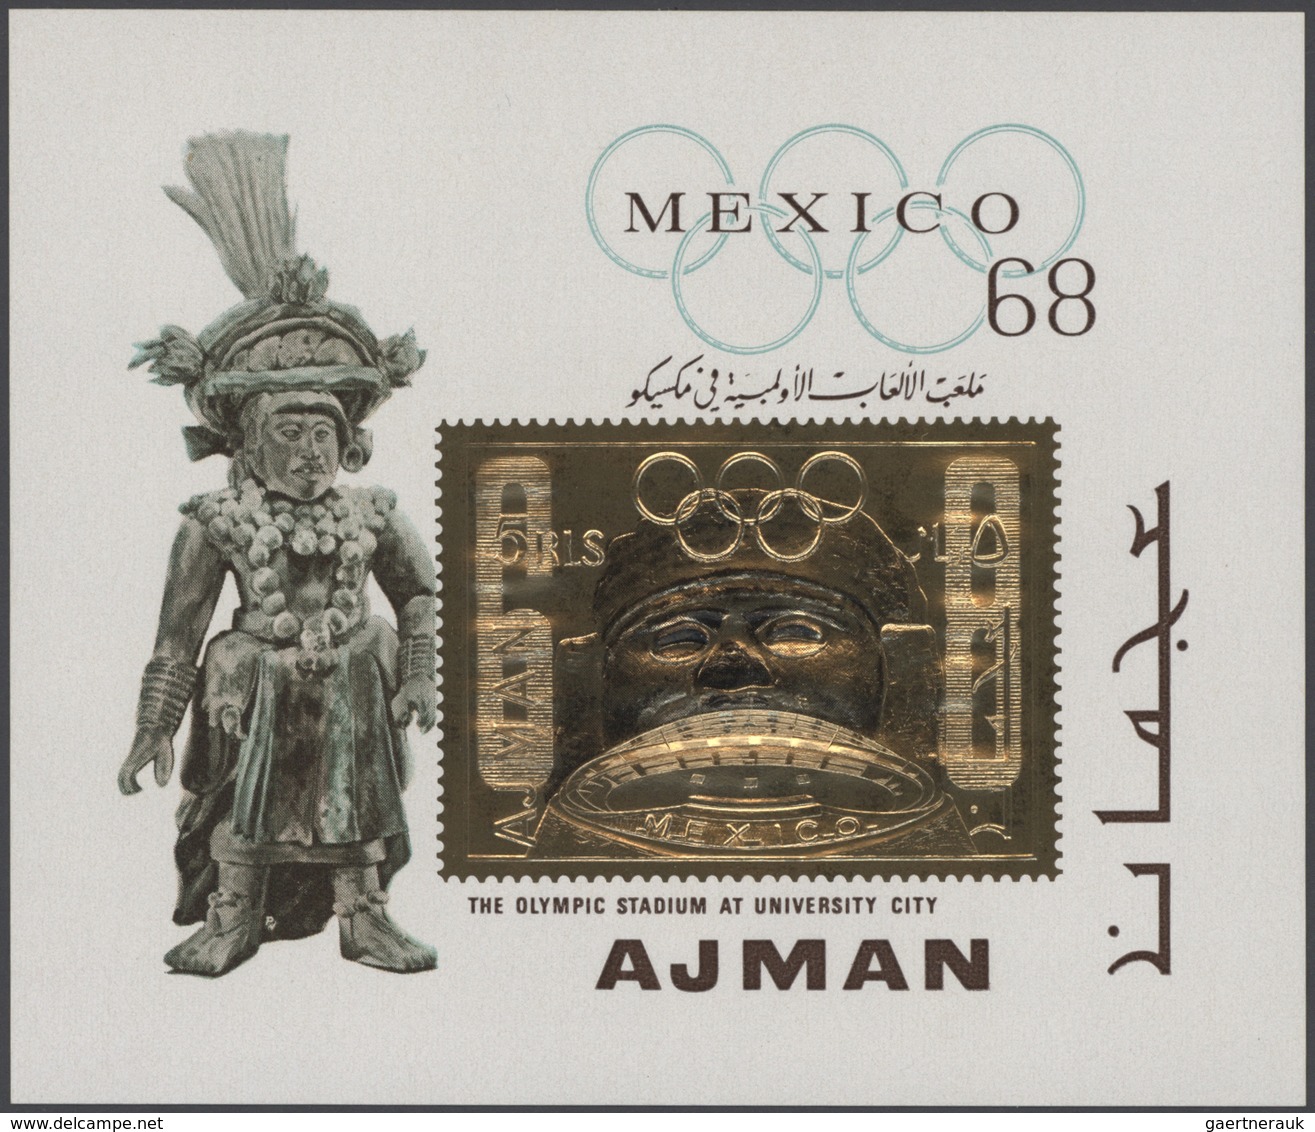 22047 Adschman / Ajman: 1964/1972, Ajman/Manama, mainly u/m accumulation in several albums with plenty of